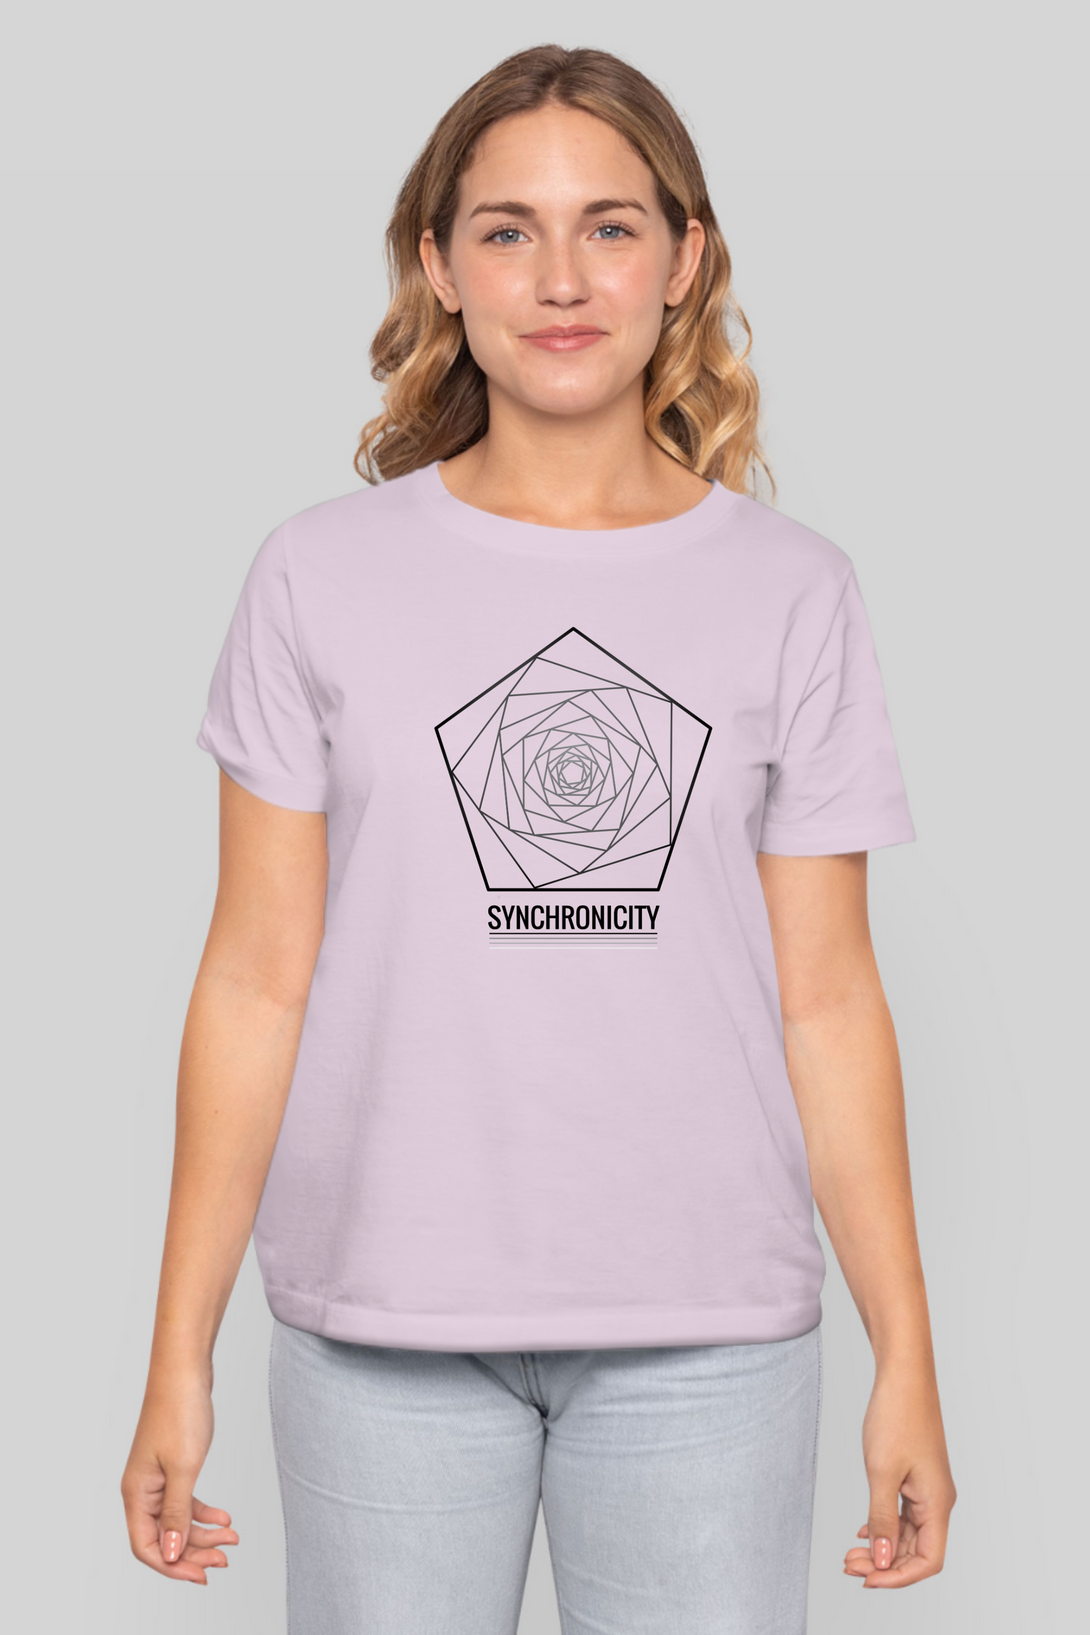 Sacred Geometry Printed T-Shirt For Women - WowWaves - 7